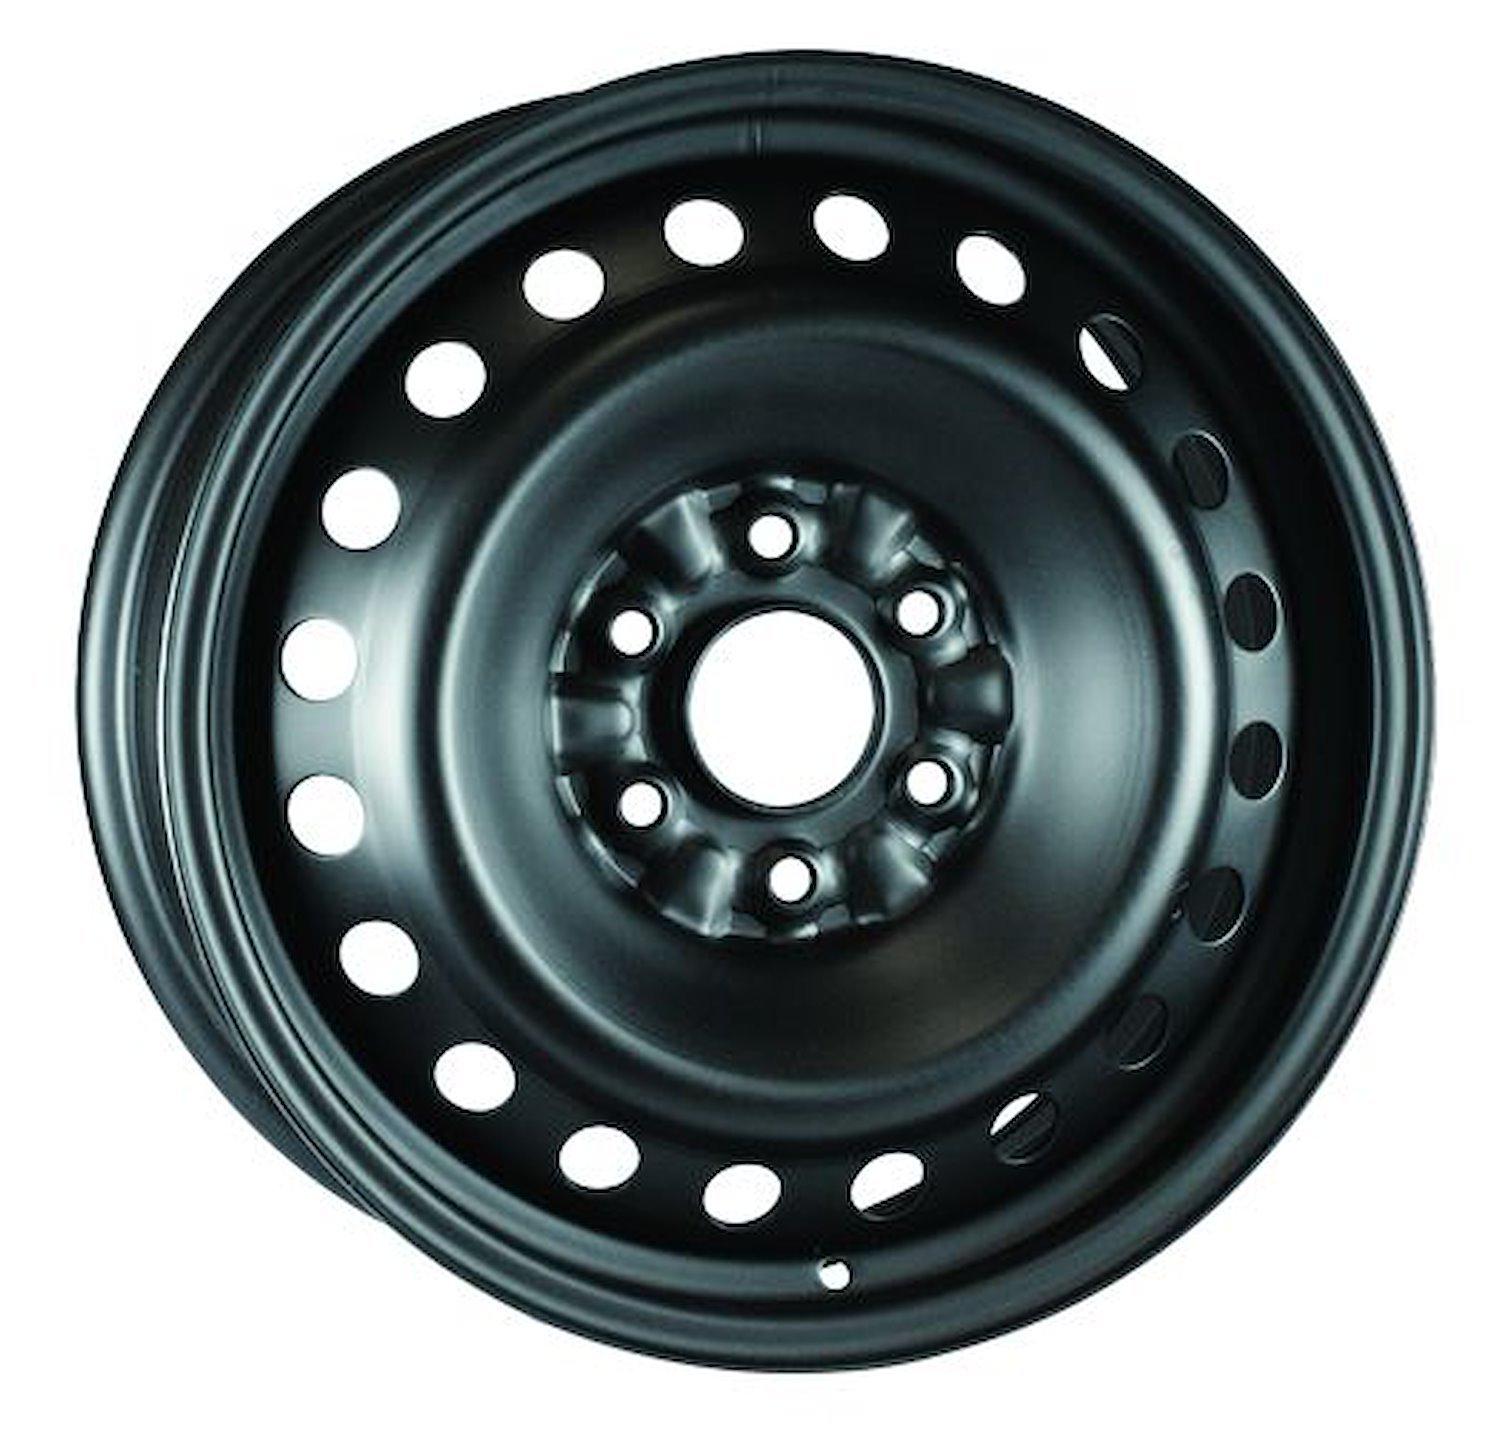 X48632 Steel Wheel [Size: 18" x 7.50"] Black Finish